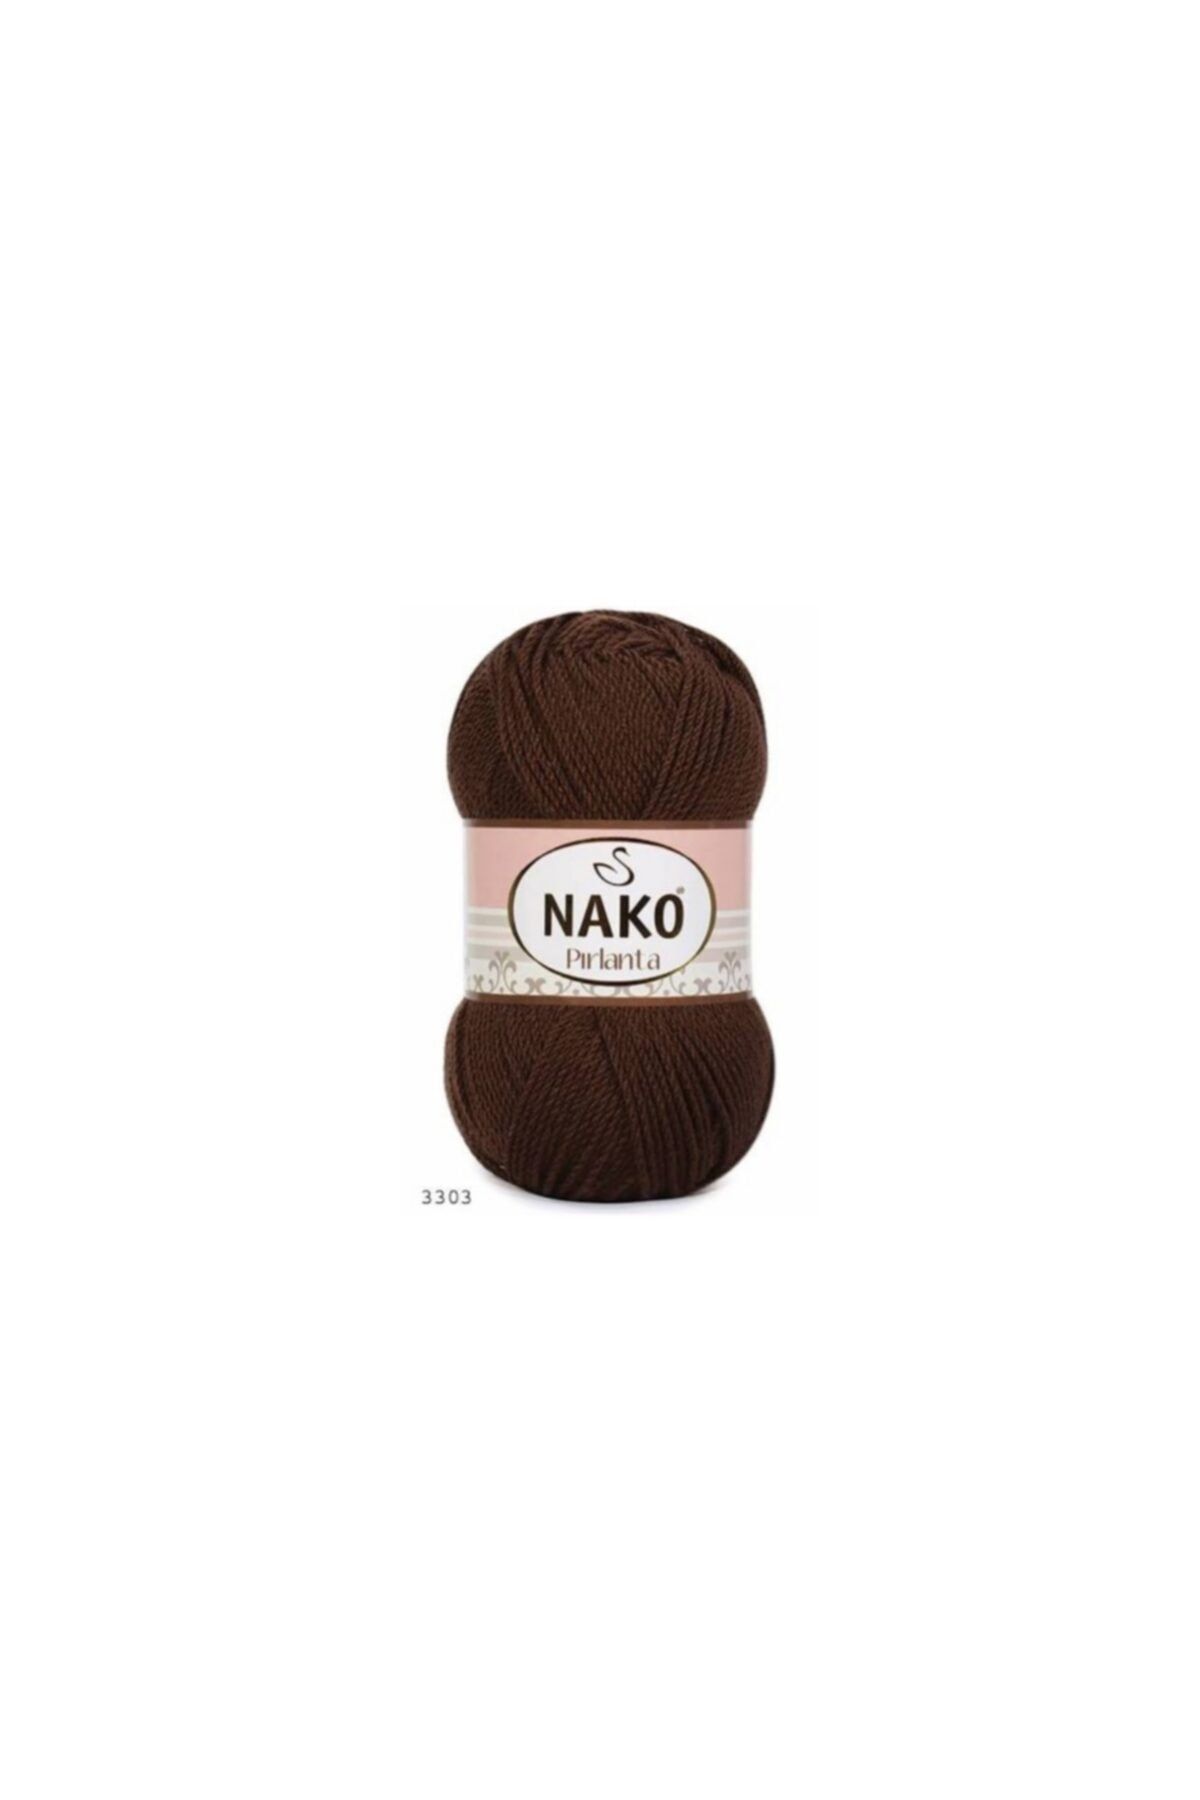 Nako Pırlanta 3303 Kahverengi Amigurumi Örgü Ipi